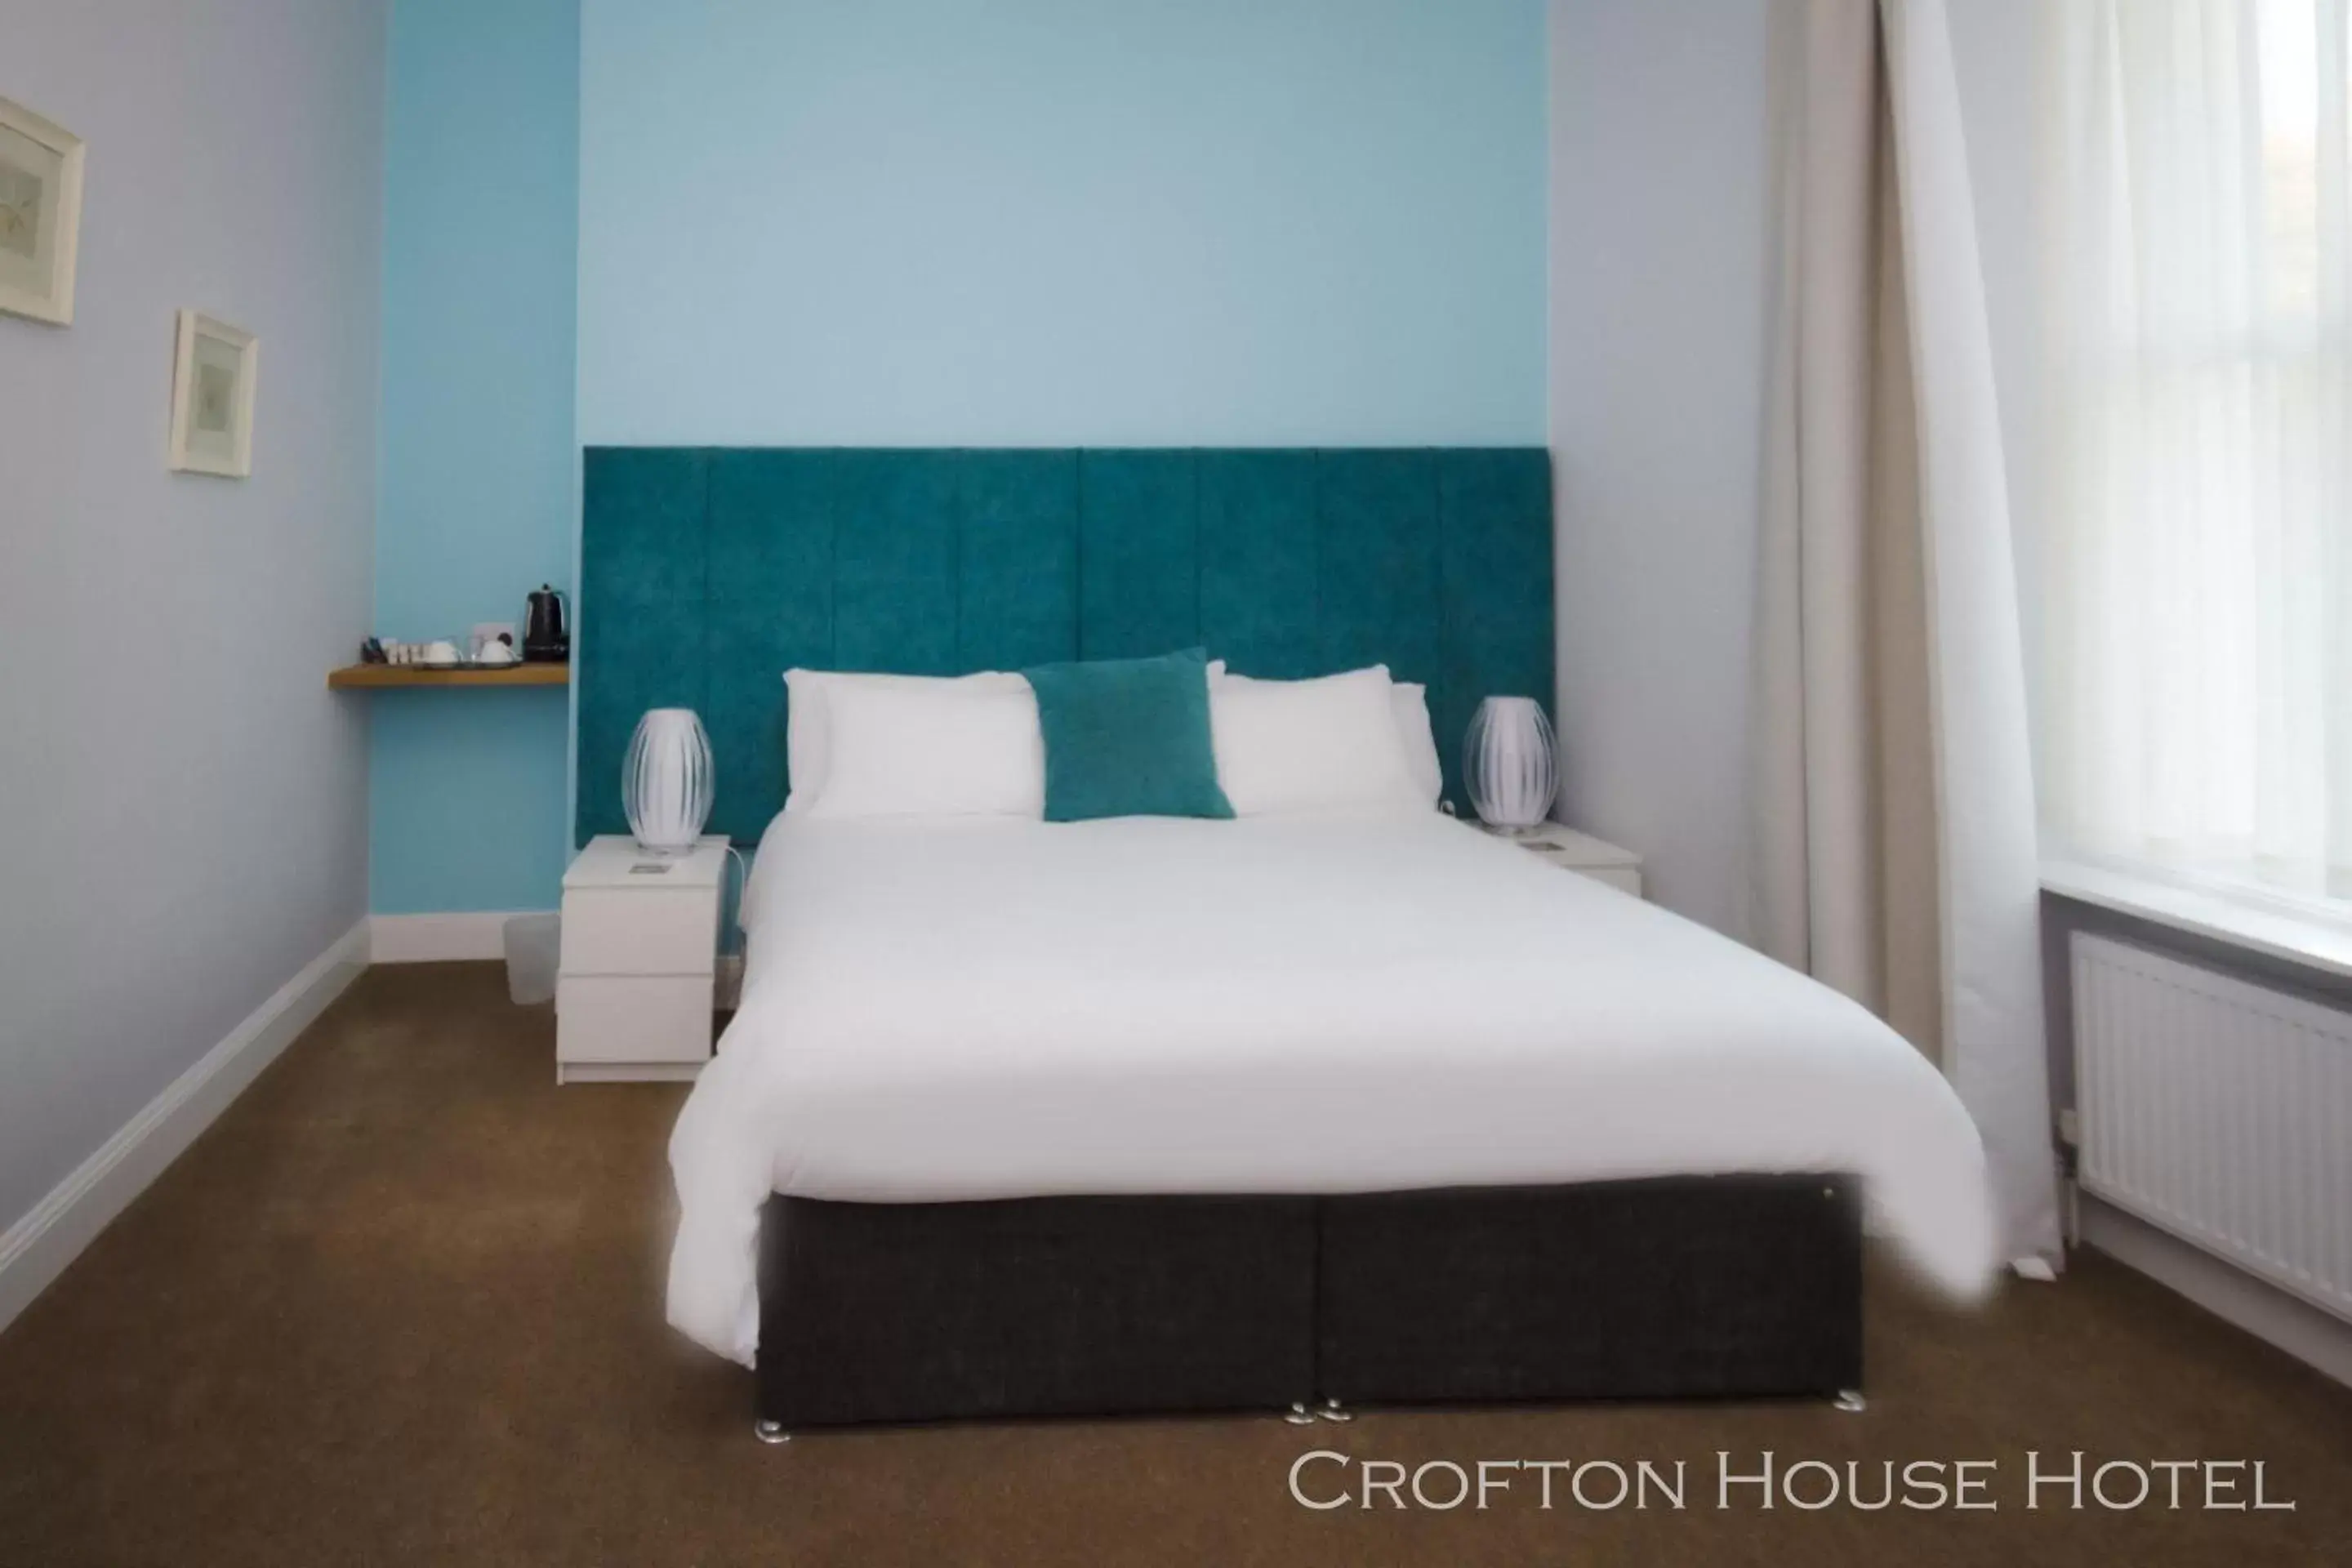 Standard Suite in Crofton House Hotel